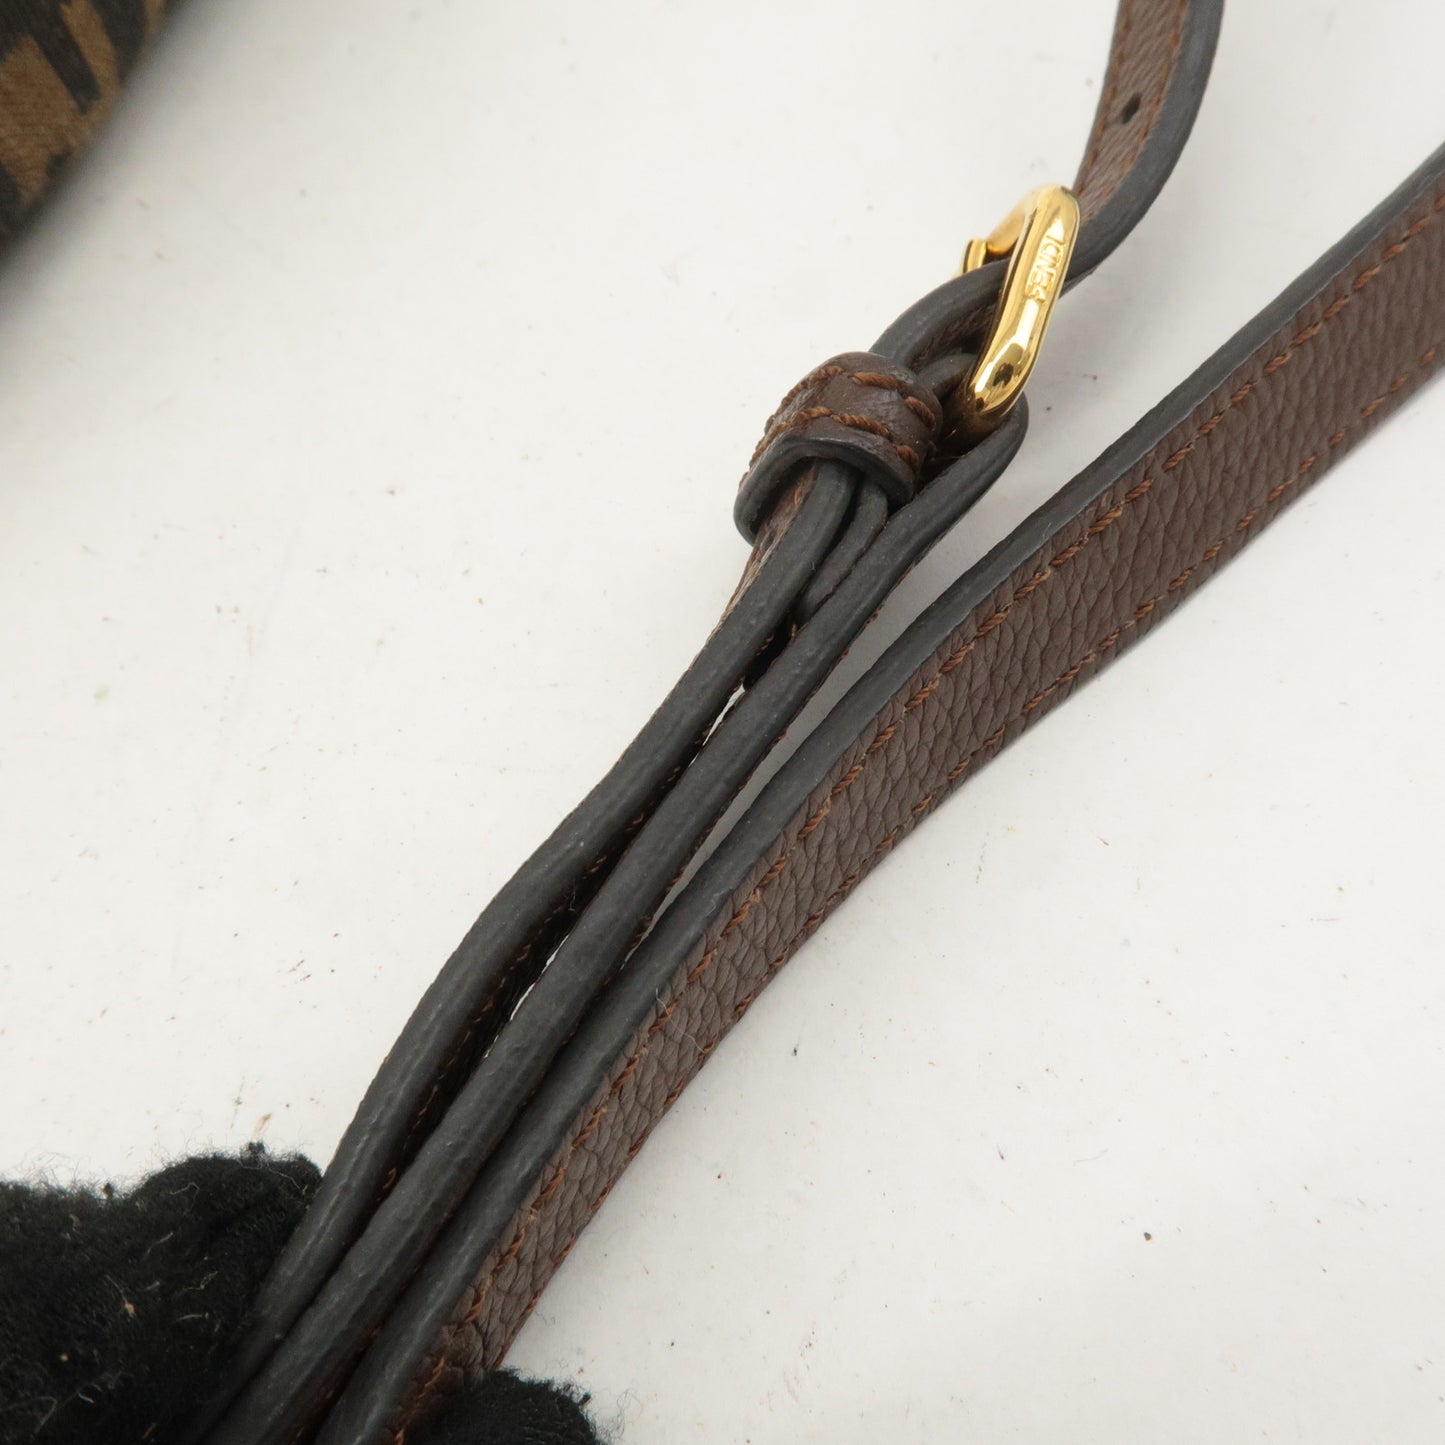 FENDI Zucca Canvas Leather Shoulder Bag Khaki Brown 8BT214